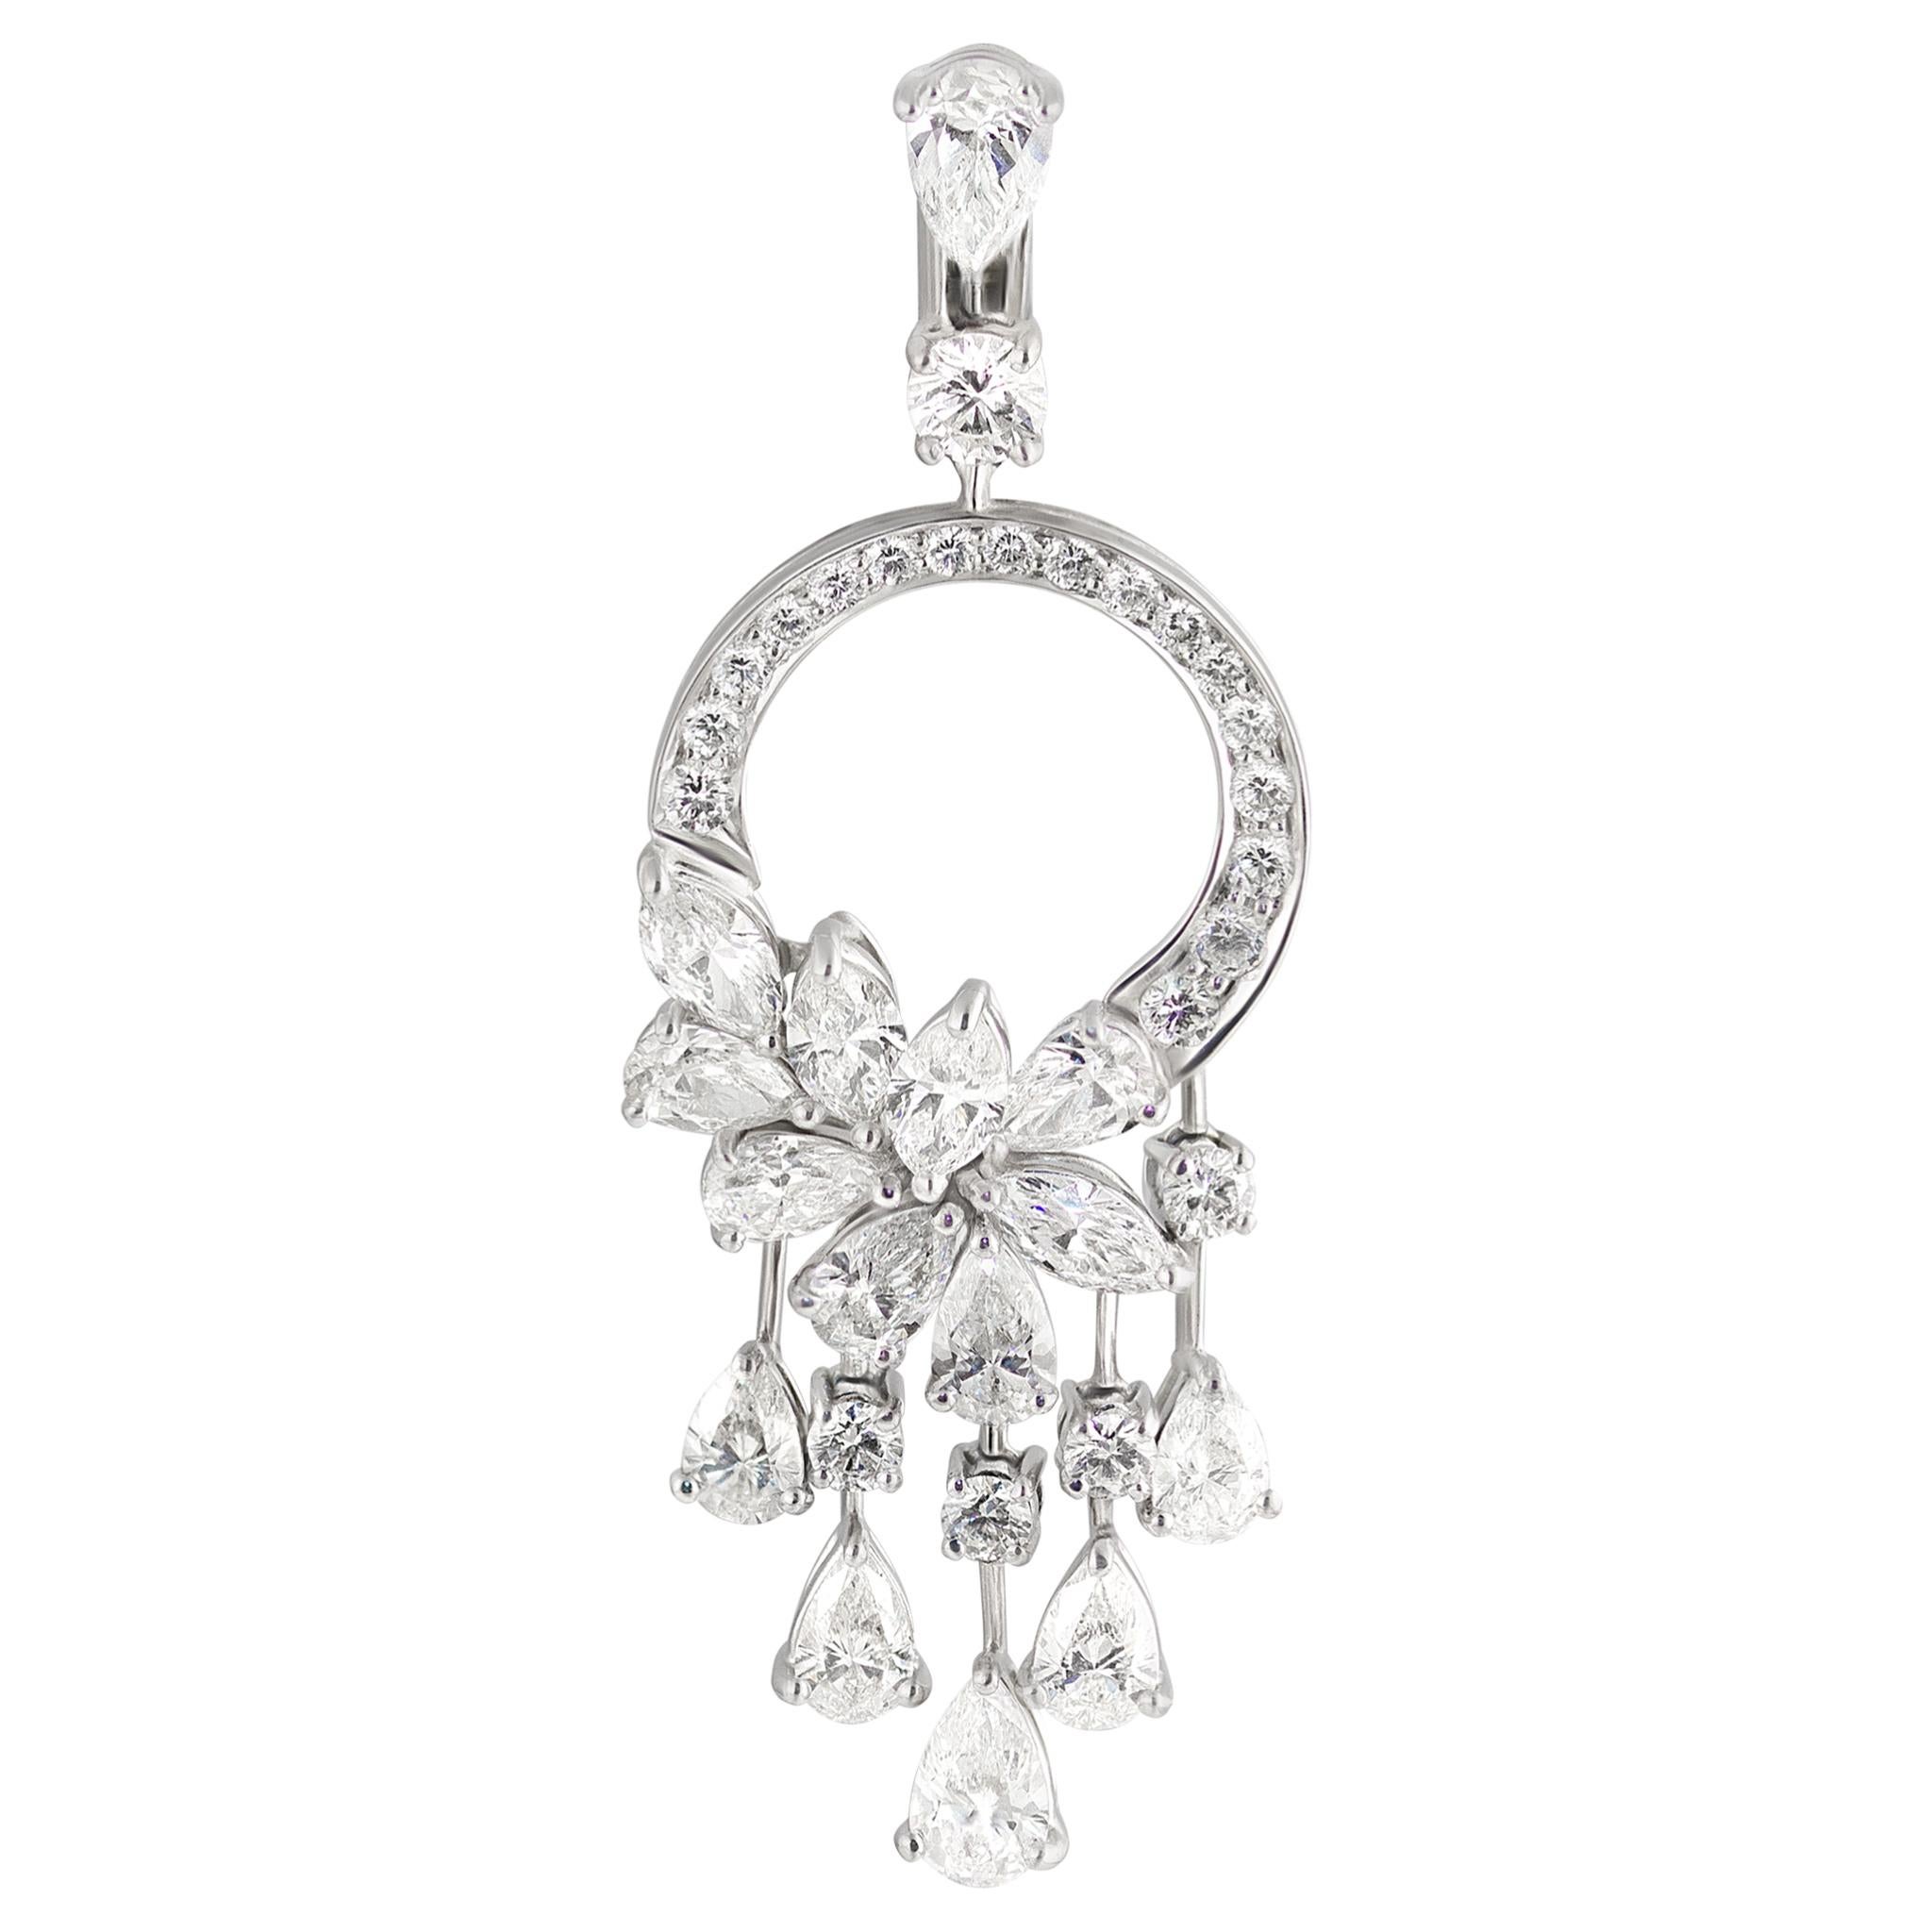 Graff 18K White Diamond Butterfly Earrings
Fancy Shaped Diamonds: 16.78ctw (Pear & Marquise)
Round Diamonds: 3.09ctw
SKU: GRAFF01076
Retail price: $200,000.00